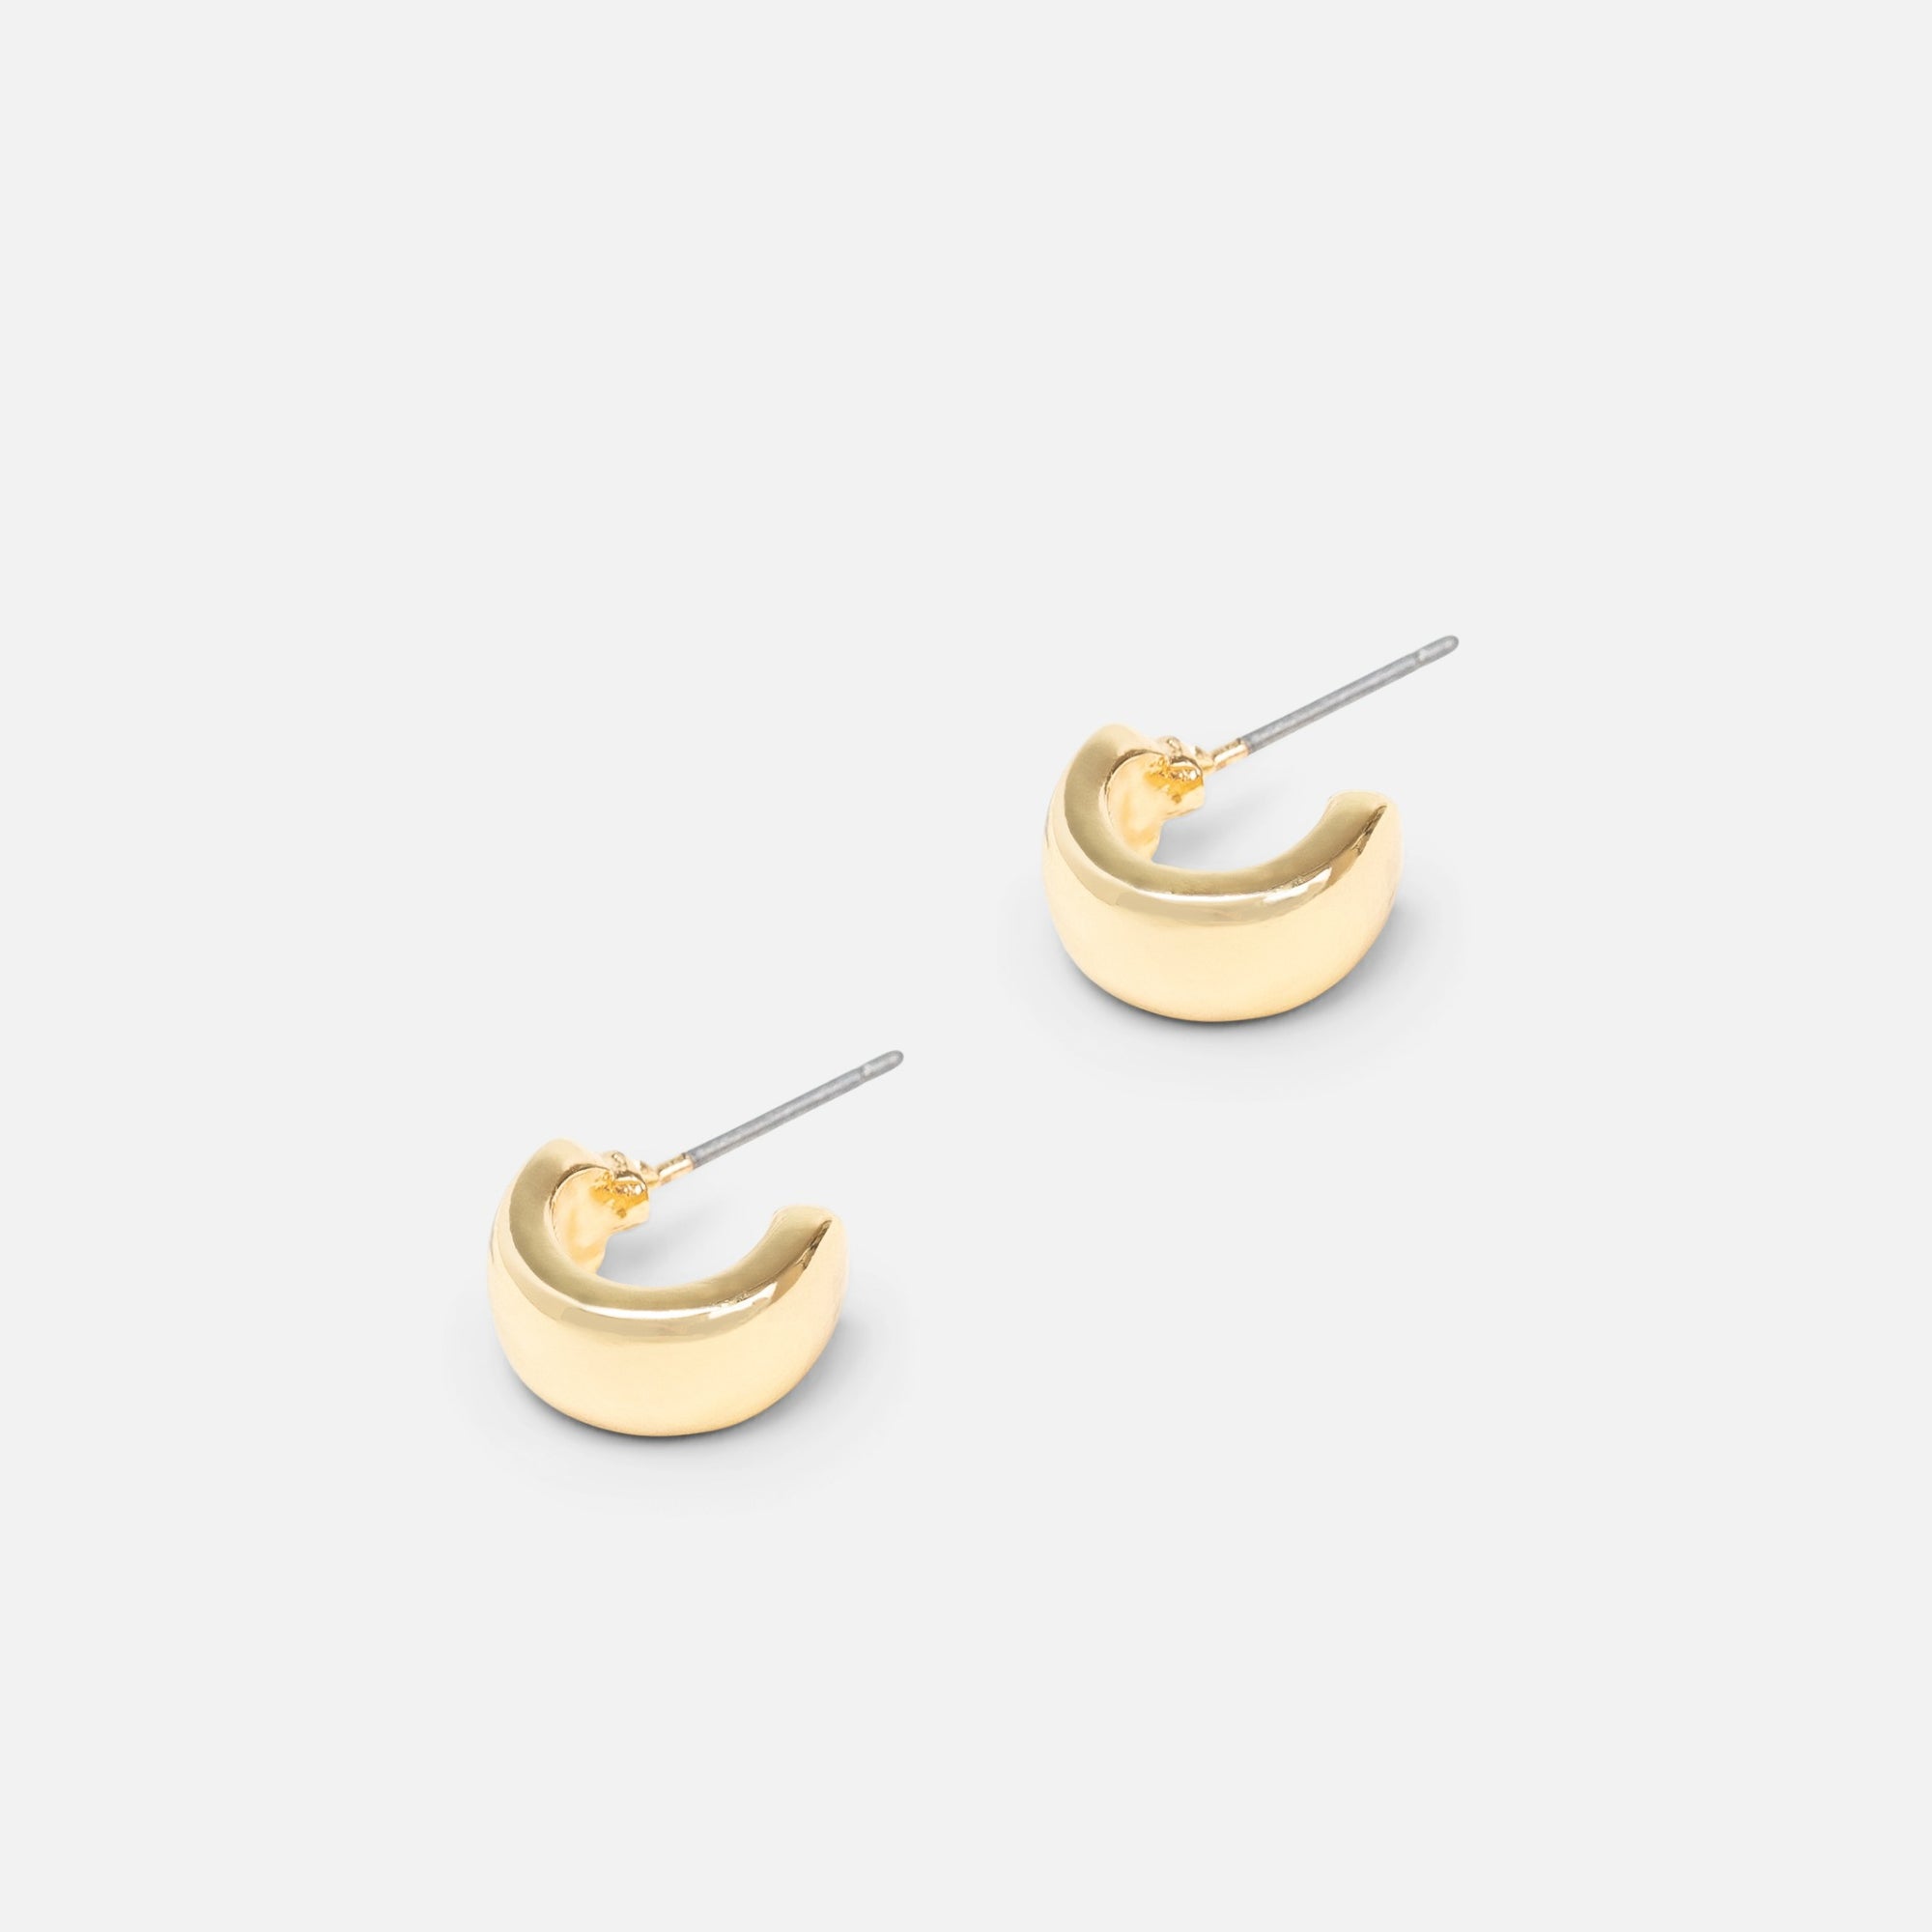 Set of three golden, silver and grey hoop earrings